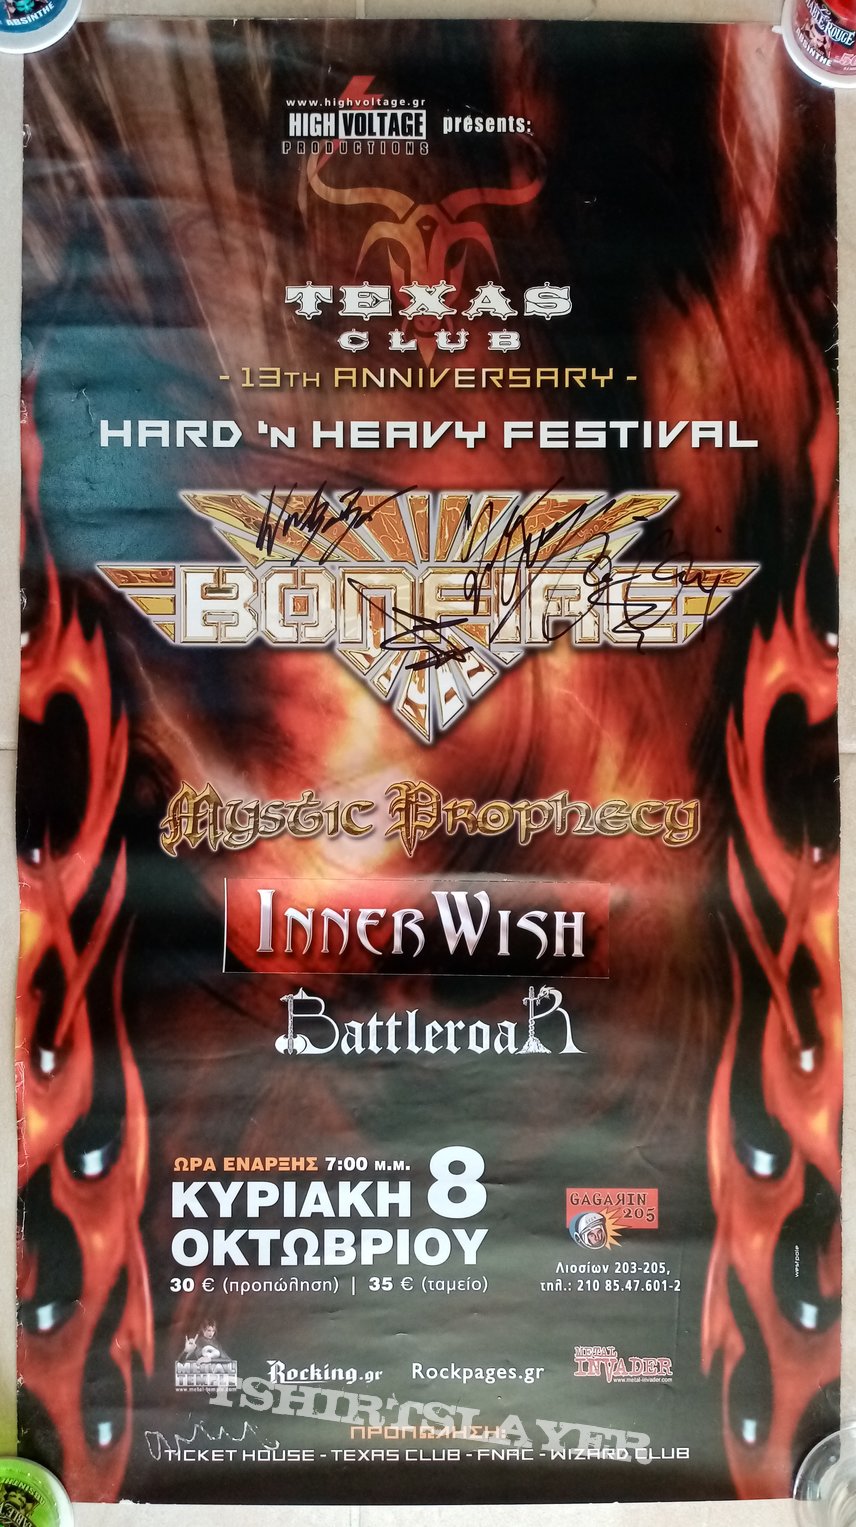 Bonfire Mystic Prophecy Inner Wish Battleroar - 08.10.2006 Official Concert Poster SIGNED